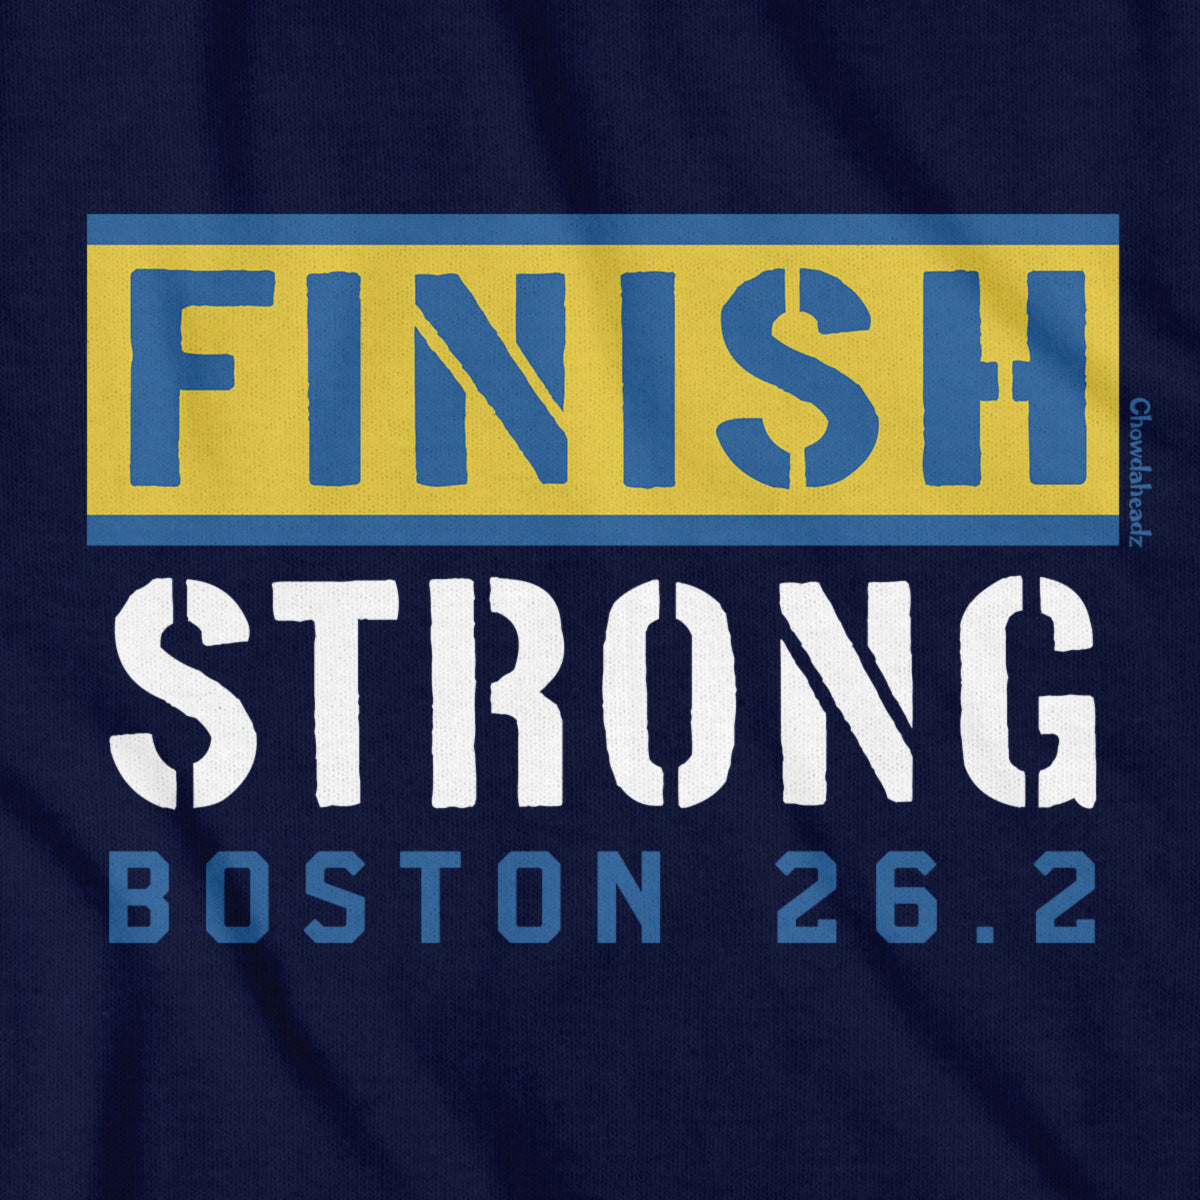 Finish Strong Boston 26.2 T-Shirt - Chowdaheadz